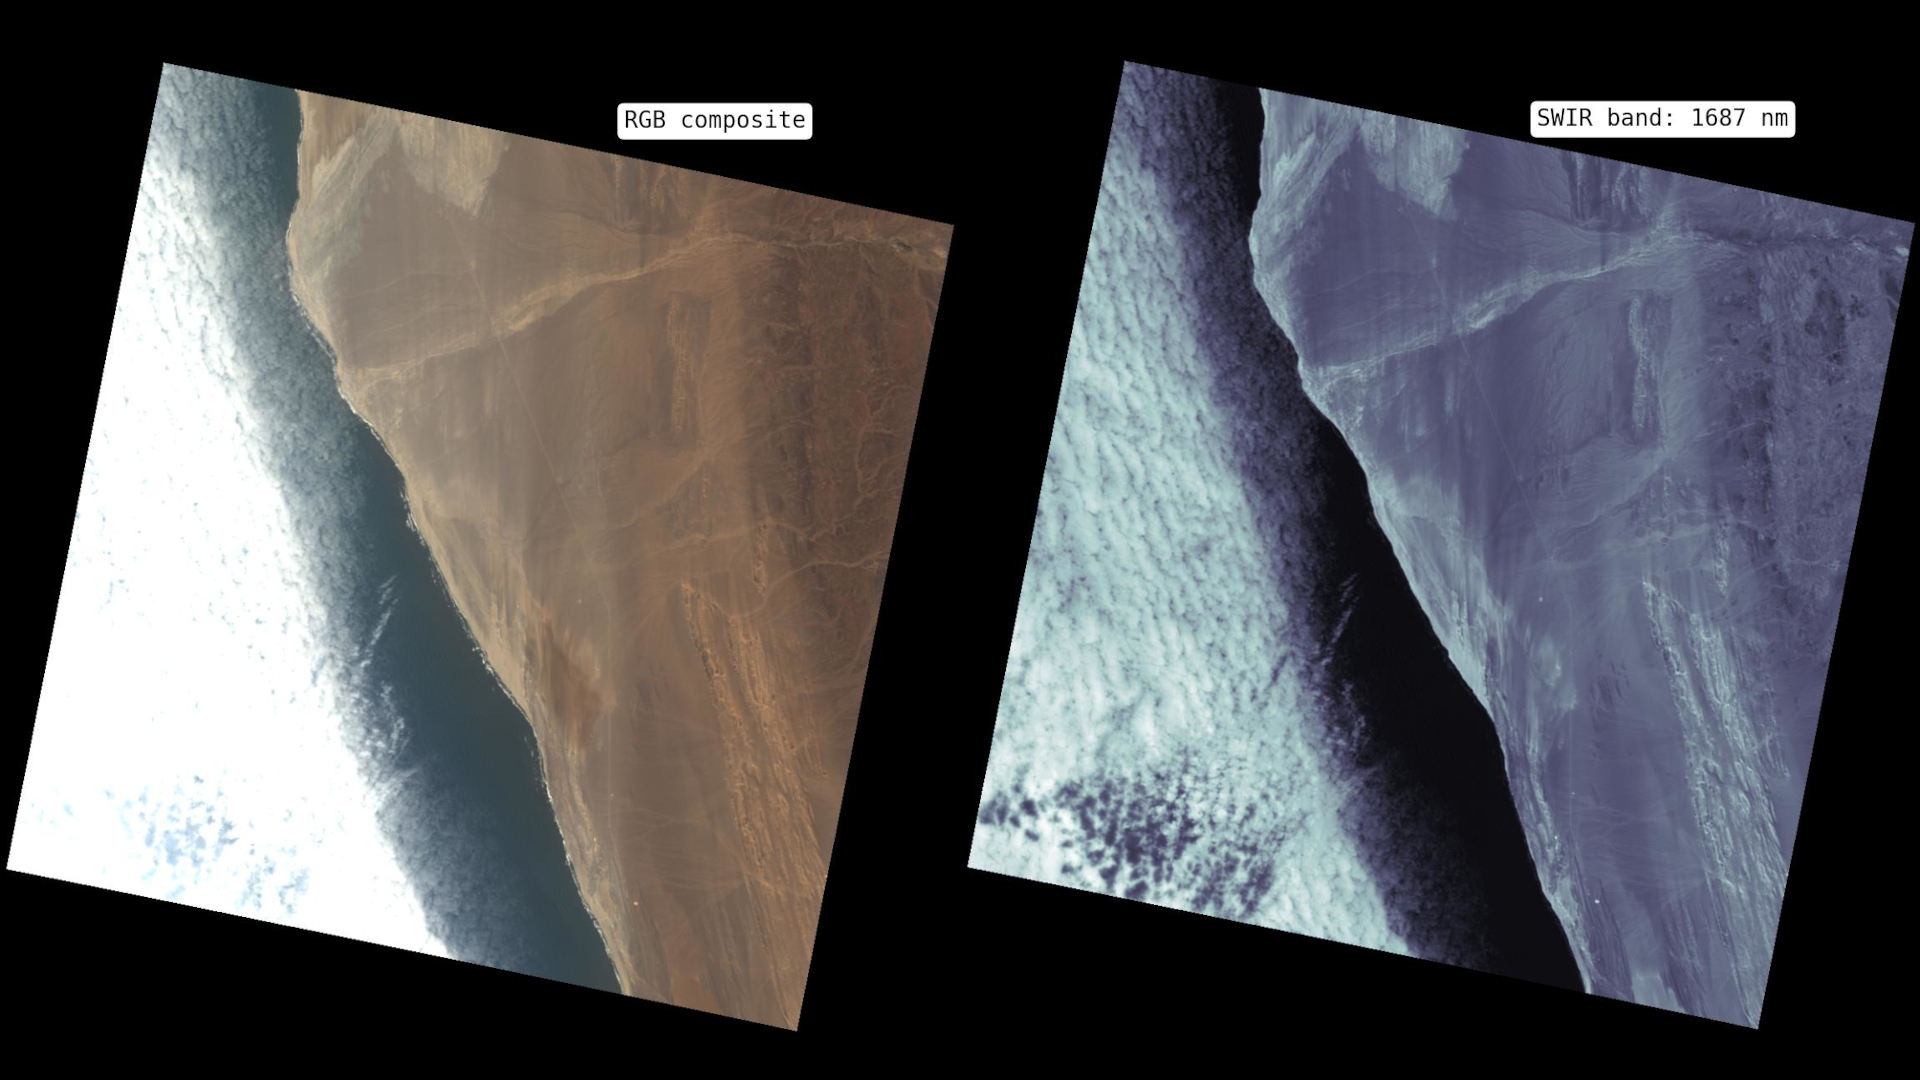 ASI - The Namib desert from space